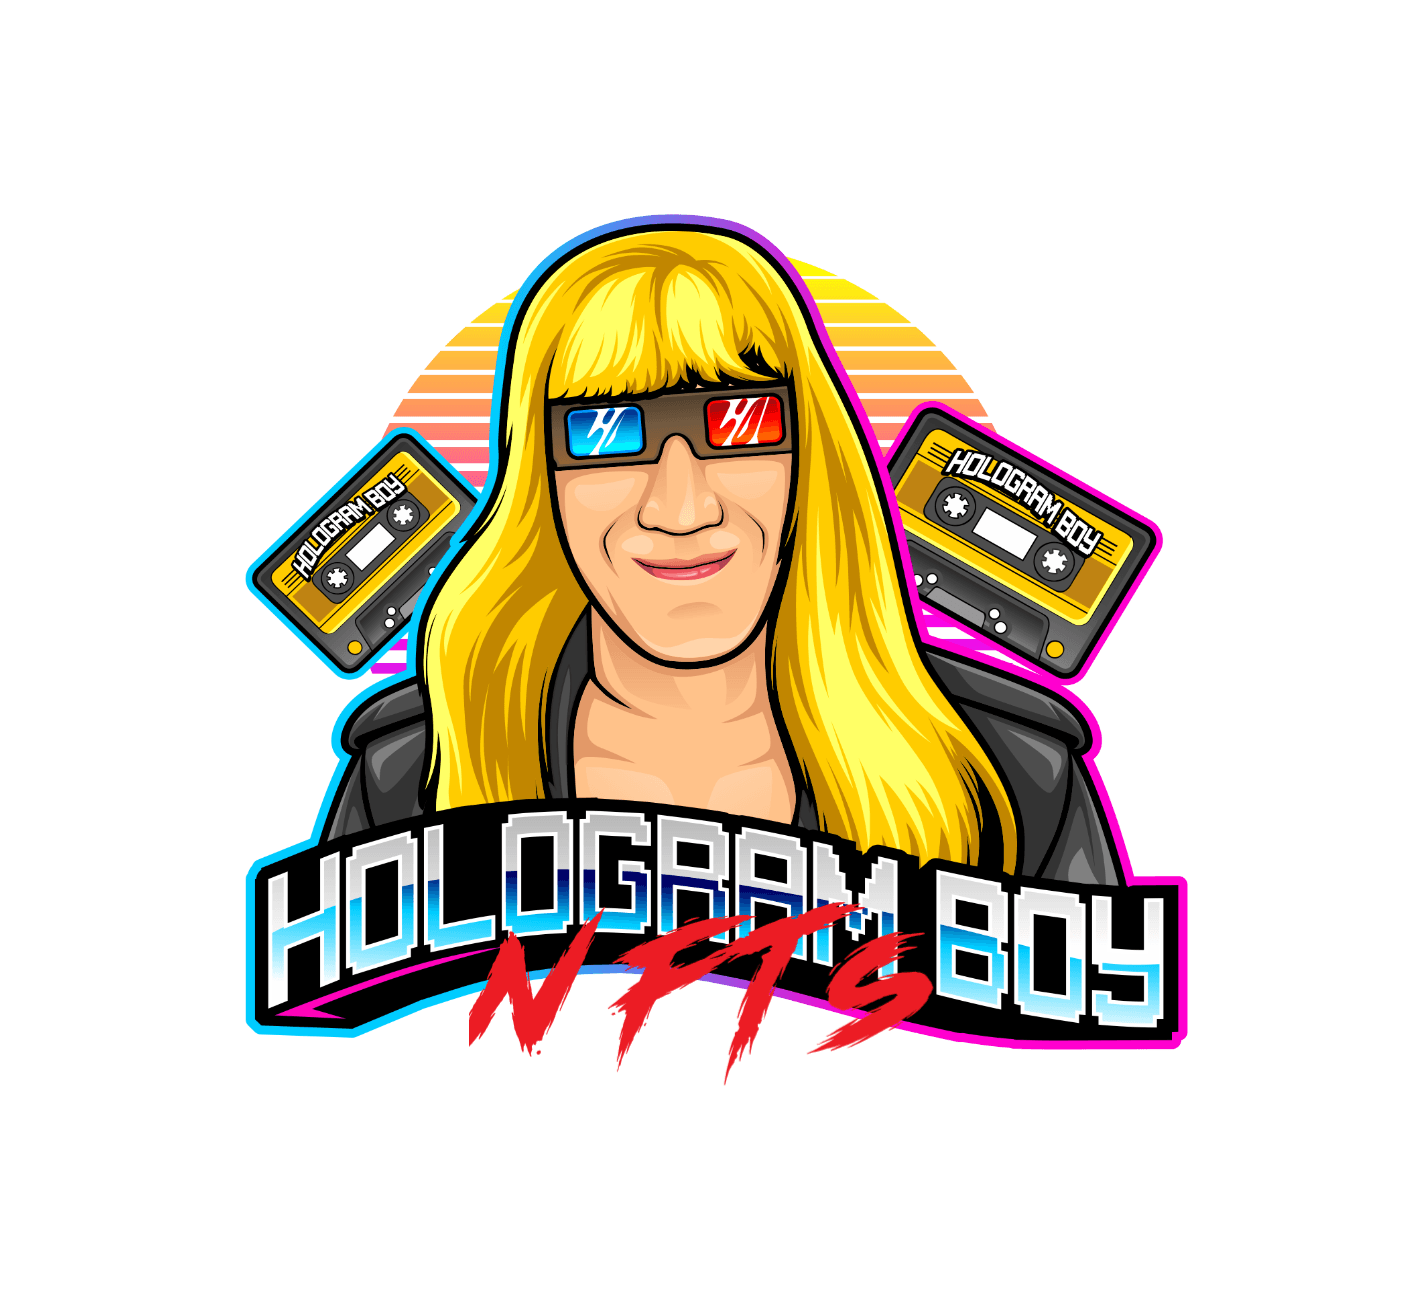 HologramBoy